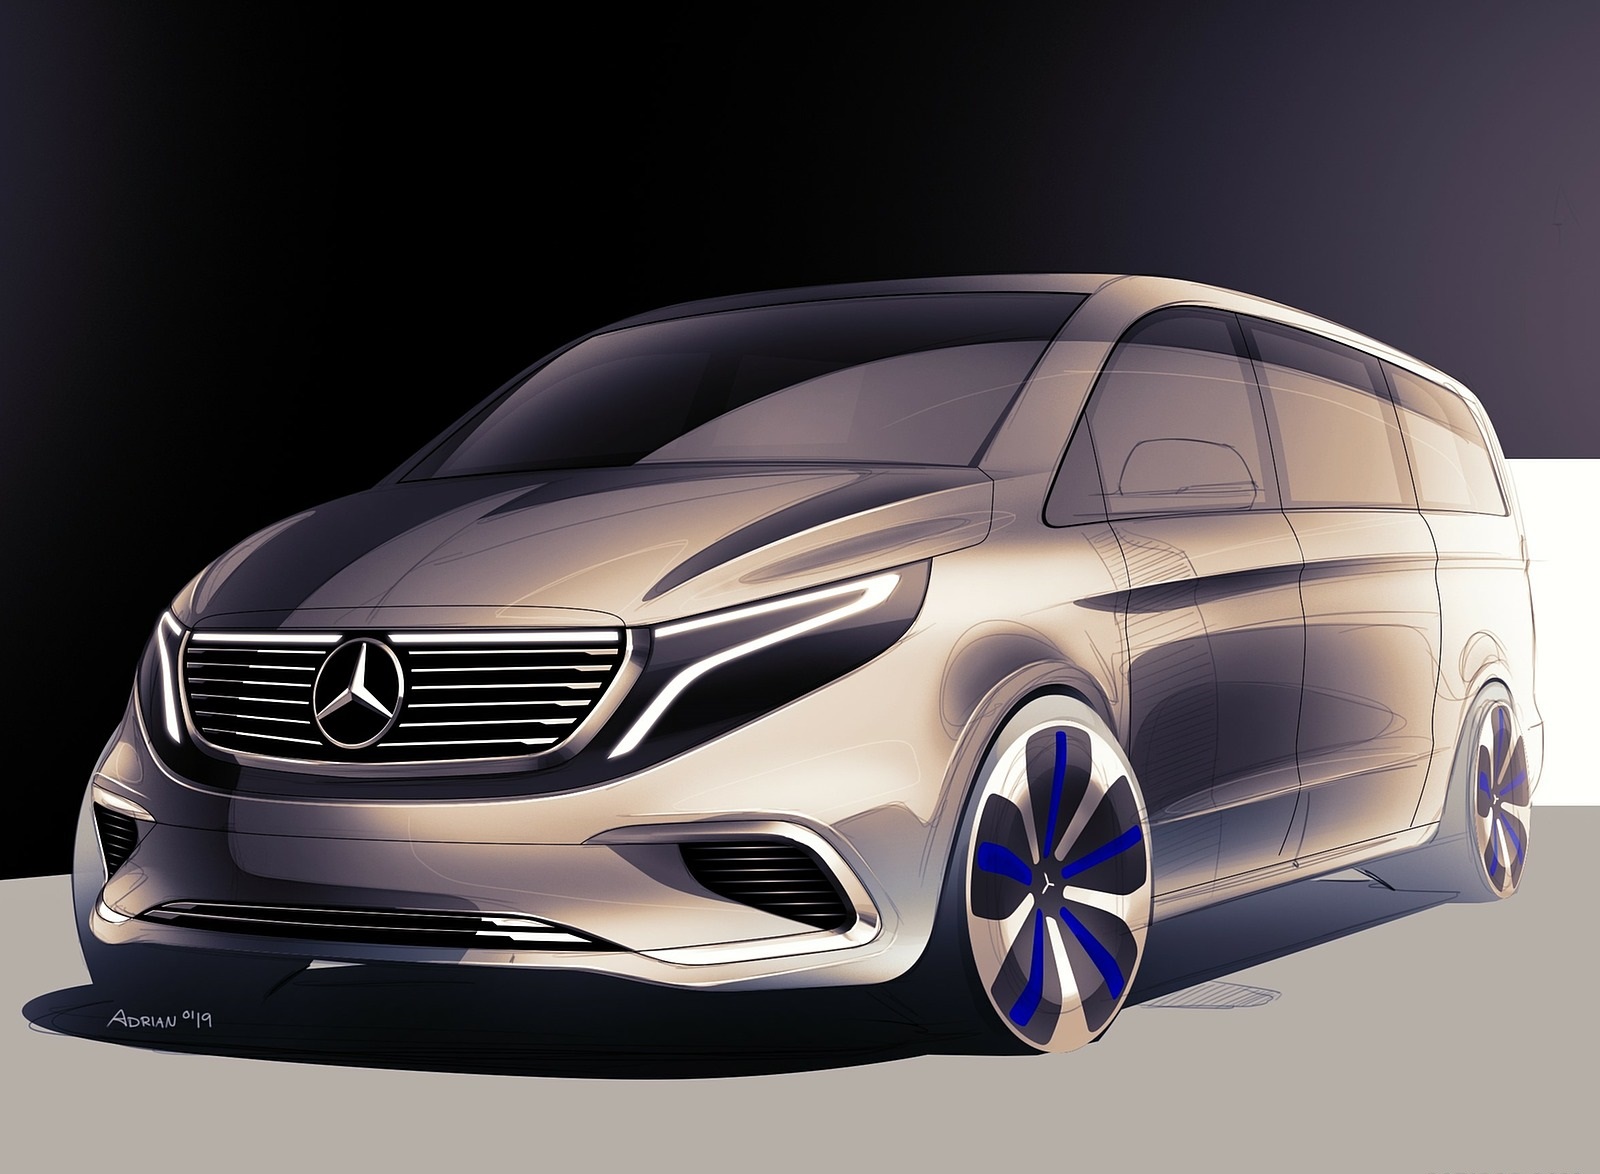 2020 Mercedes-Benz EQV 300 Design Sketch Wallpapers #38 of 43